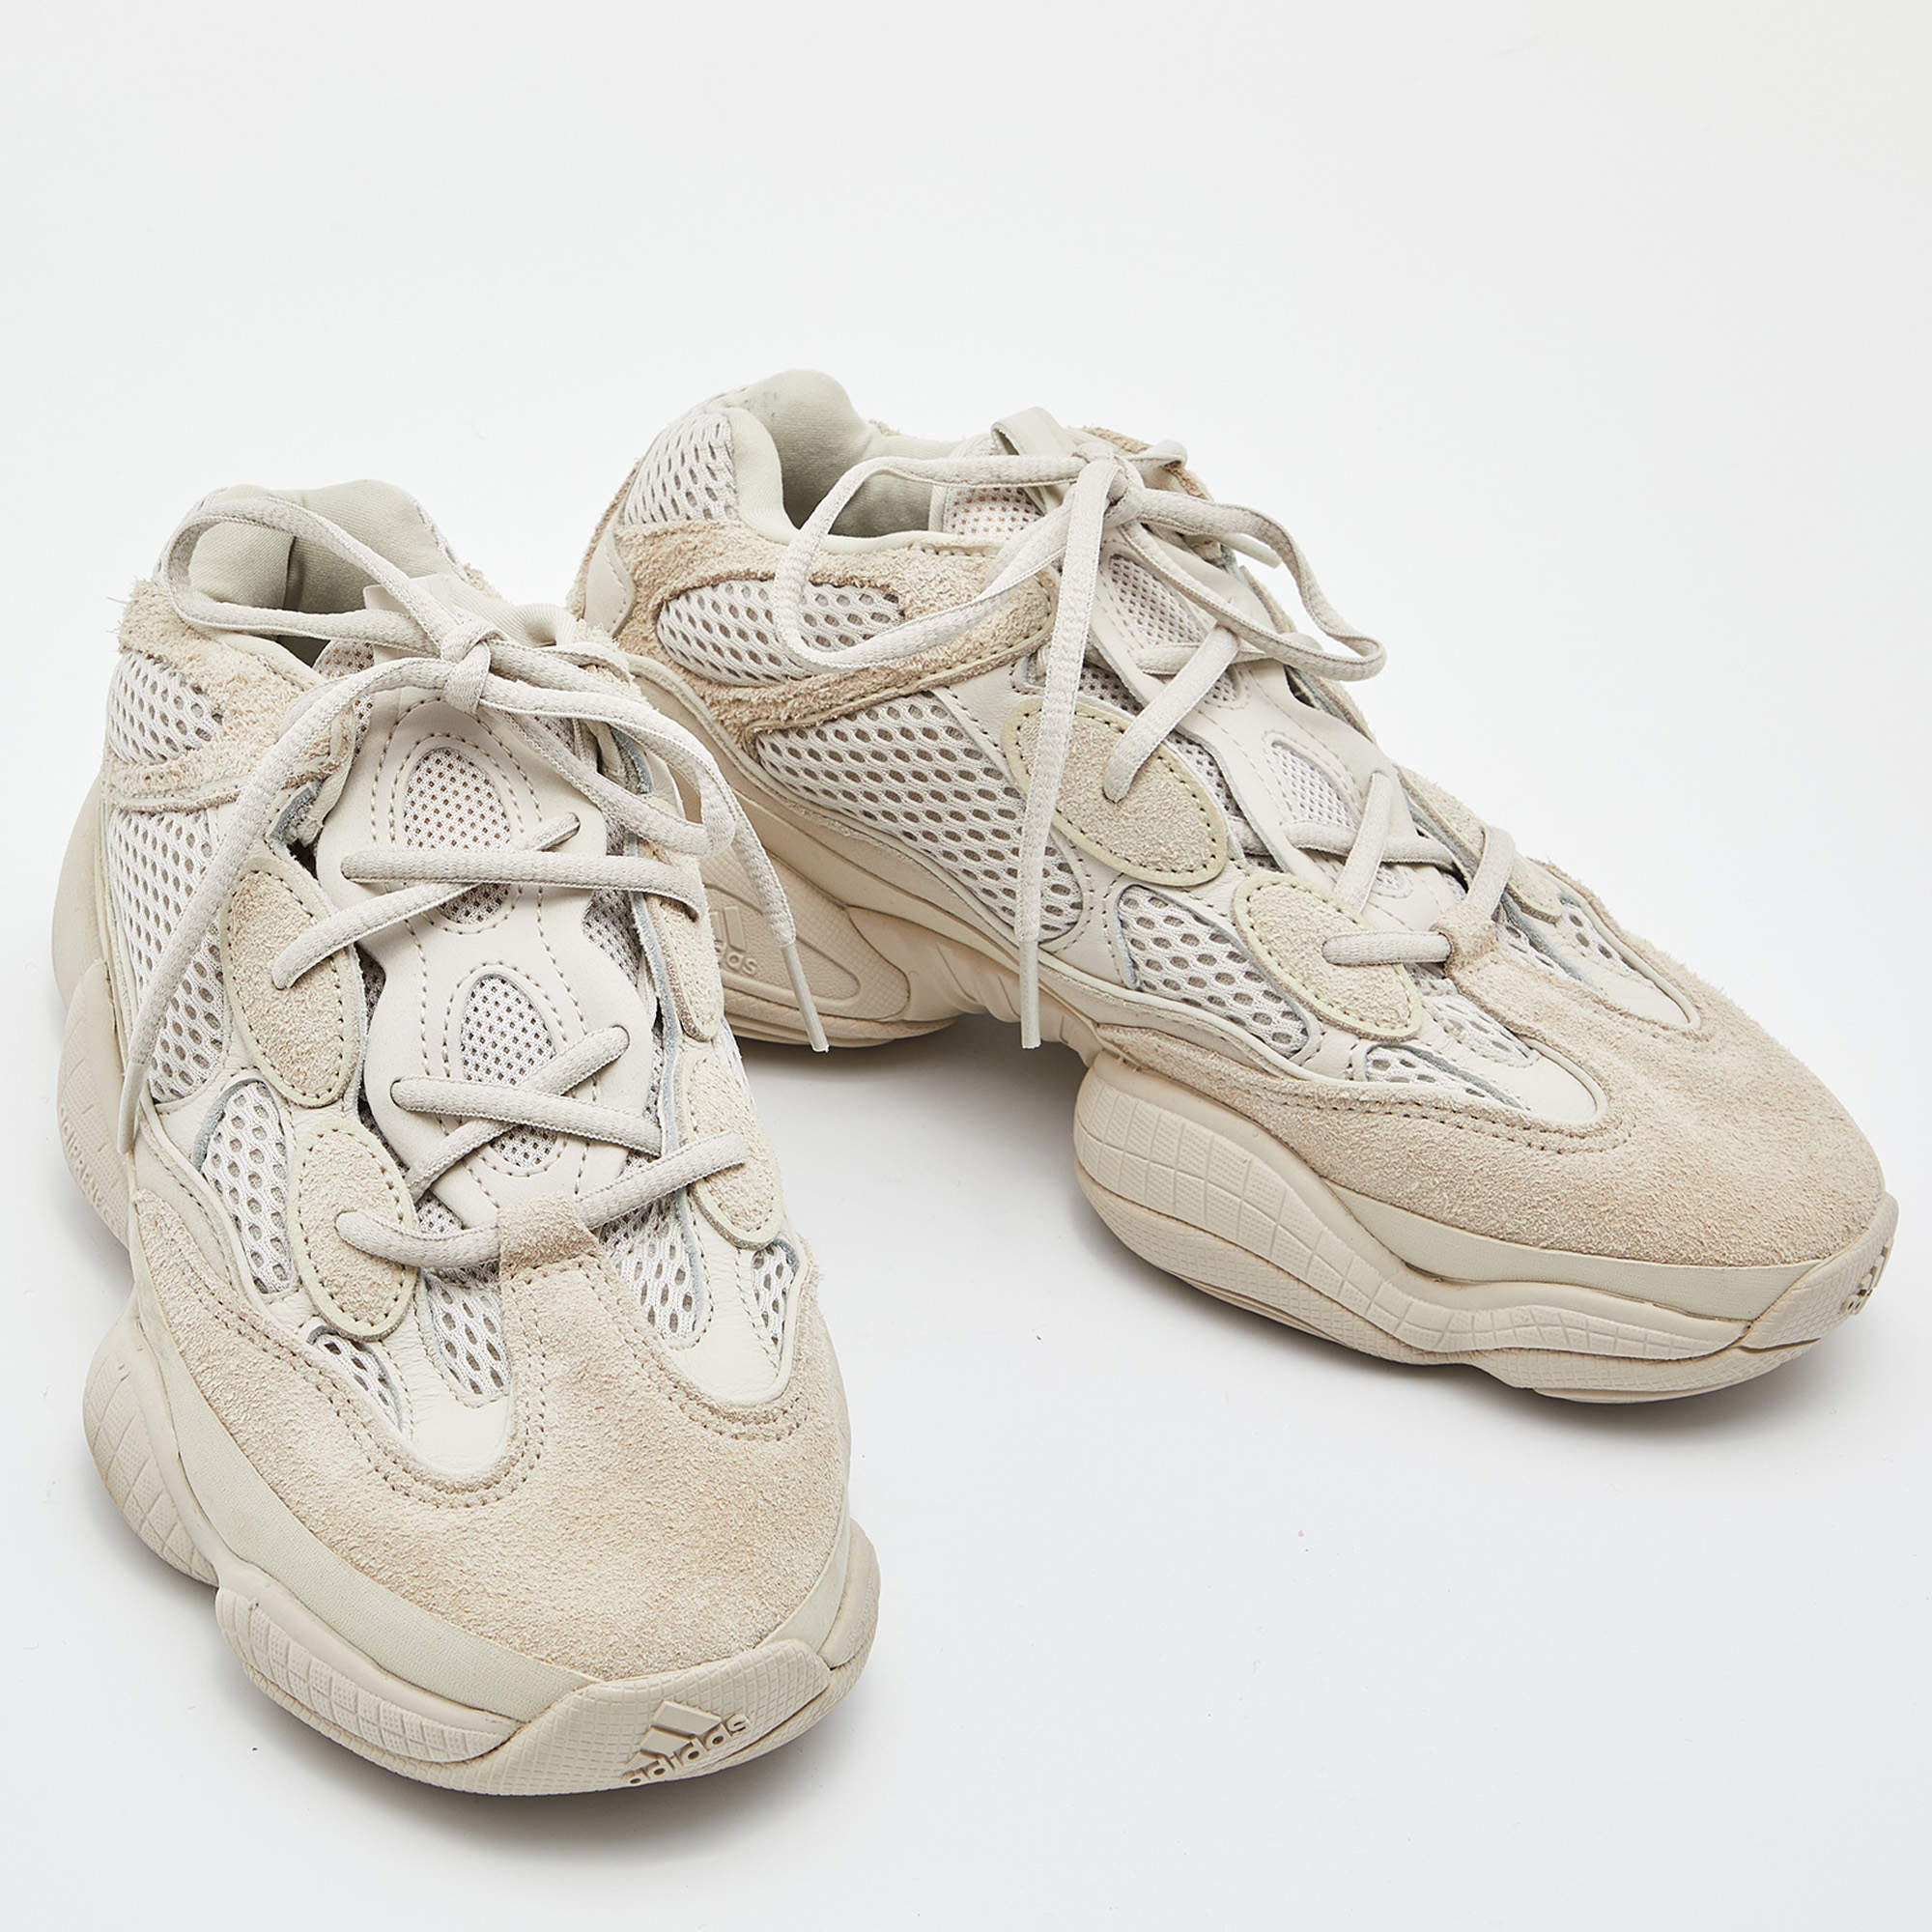 adidas Yeezy Desert Rat 500 “Blush” 28cm-